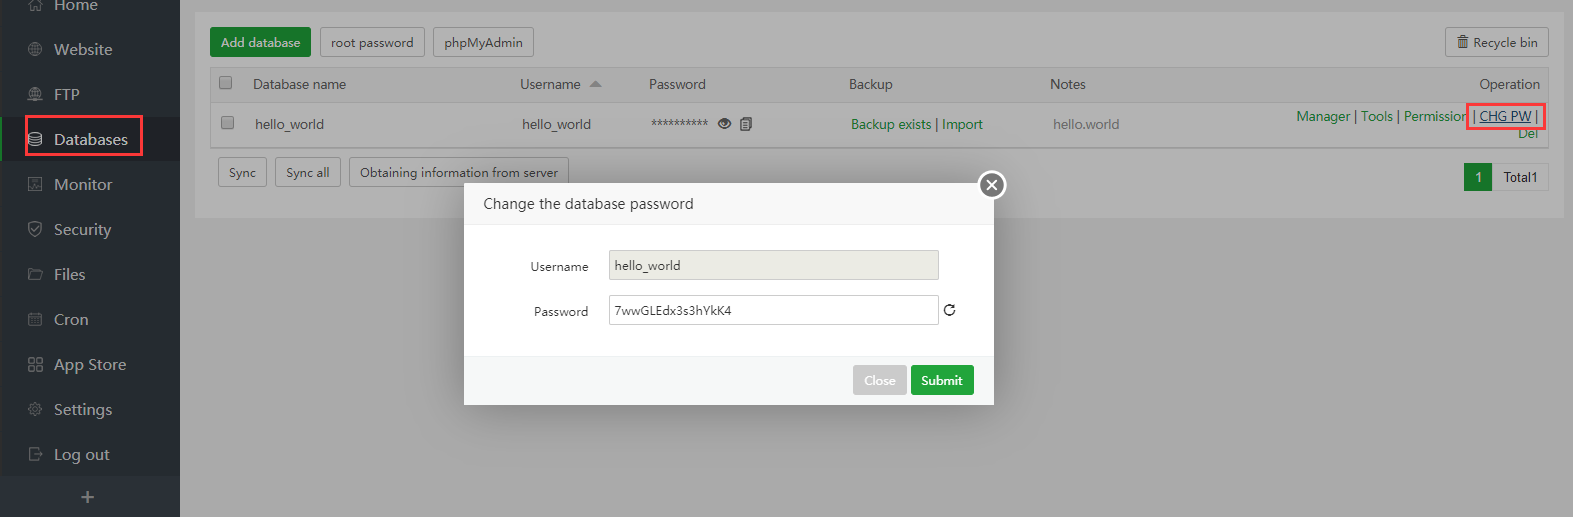 6. Change Database Password